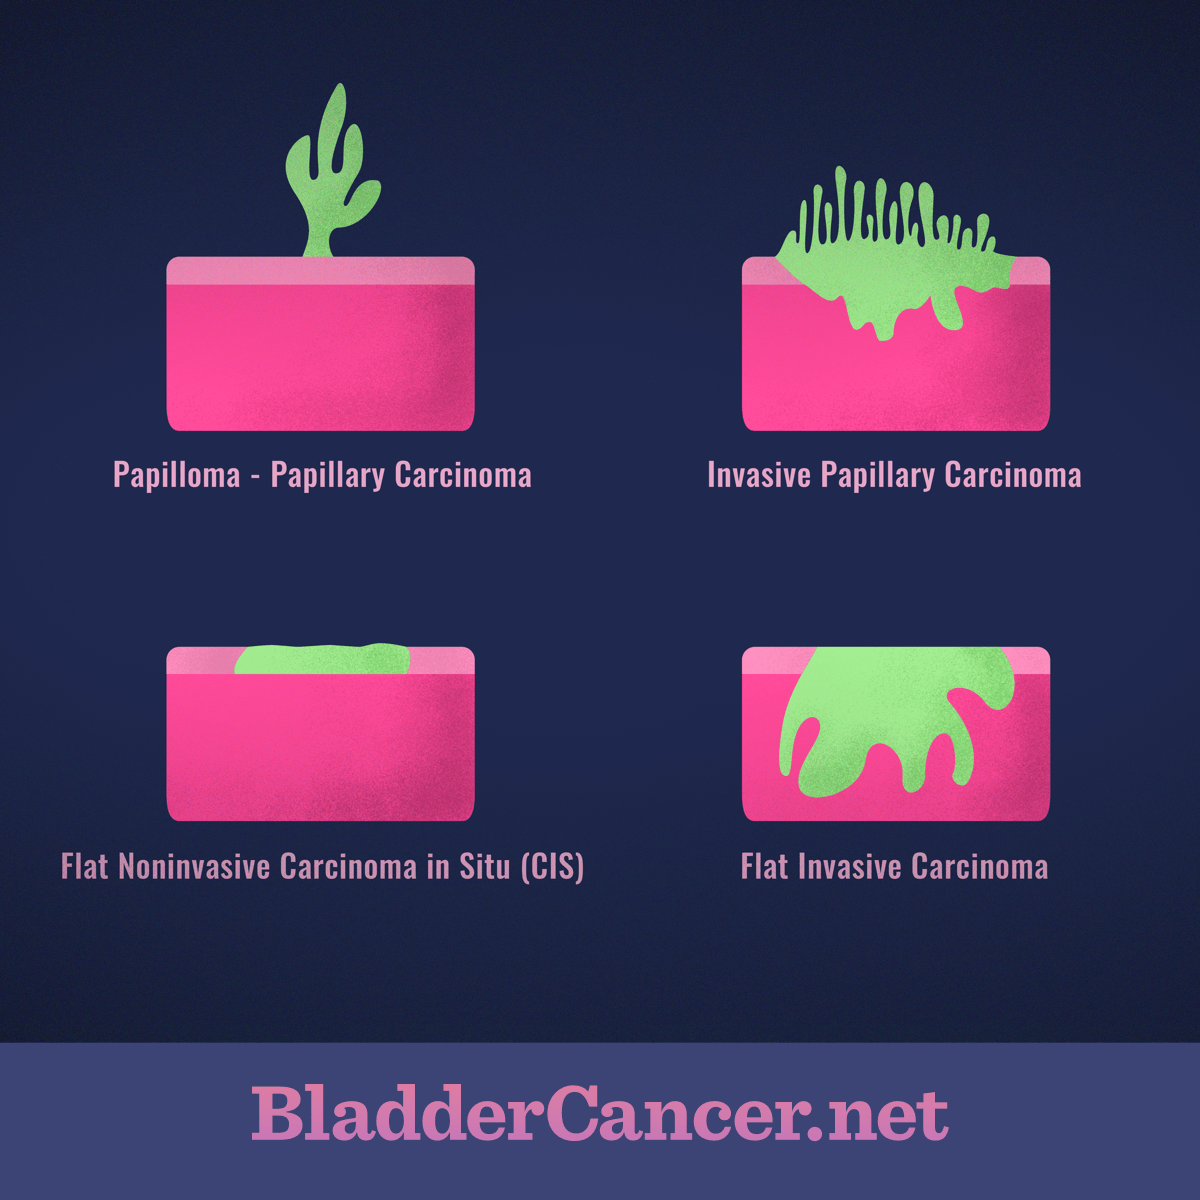 benign cancer of the bladder